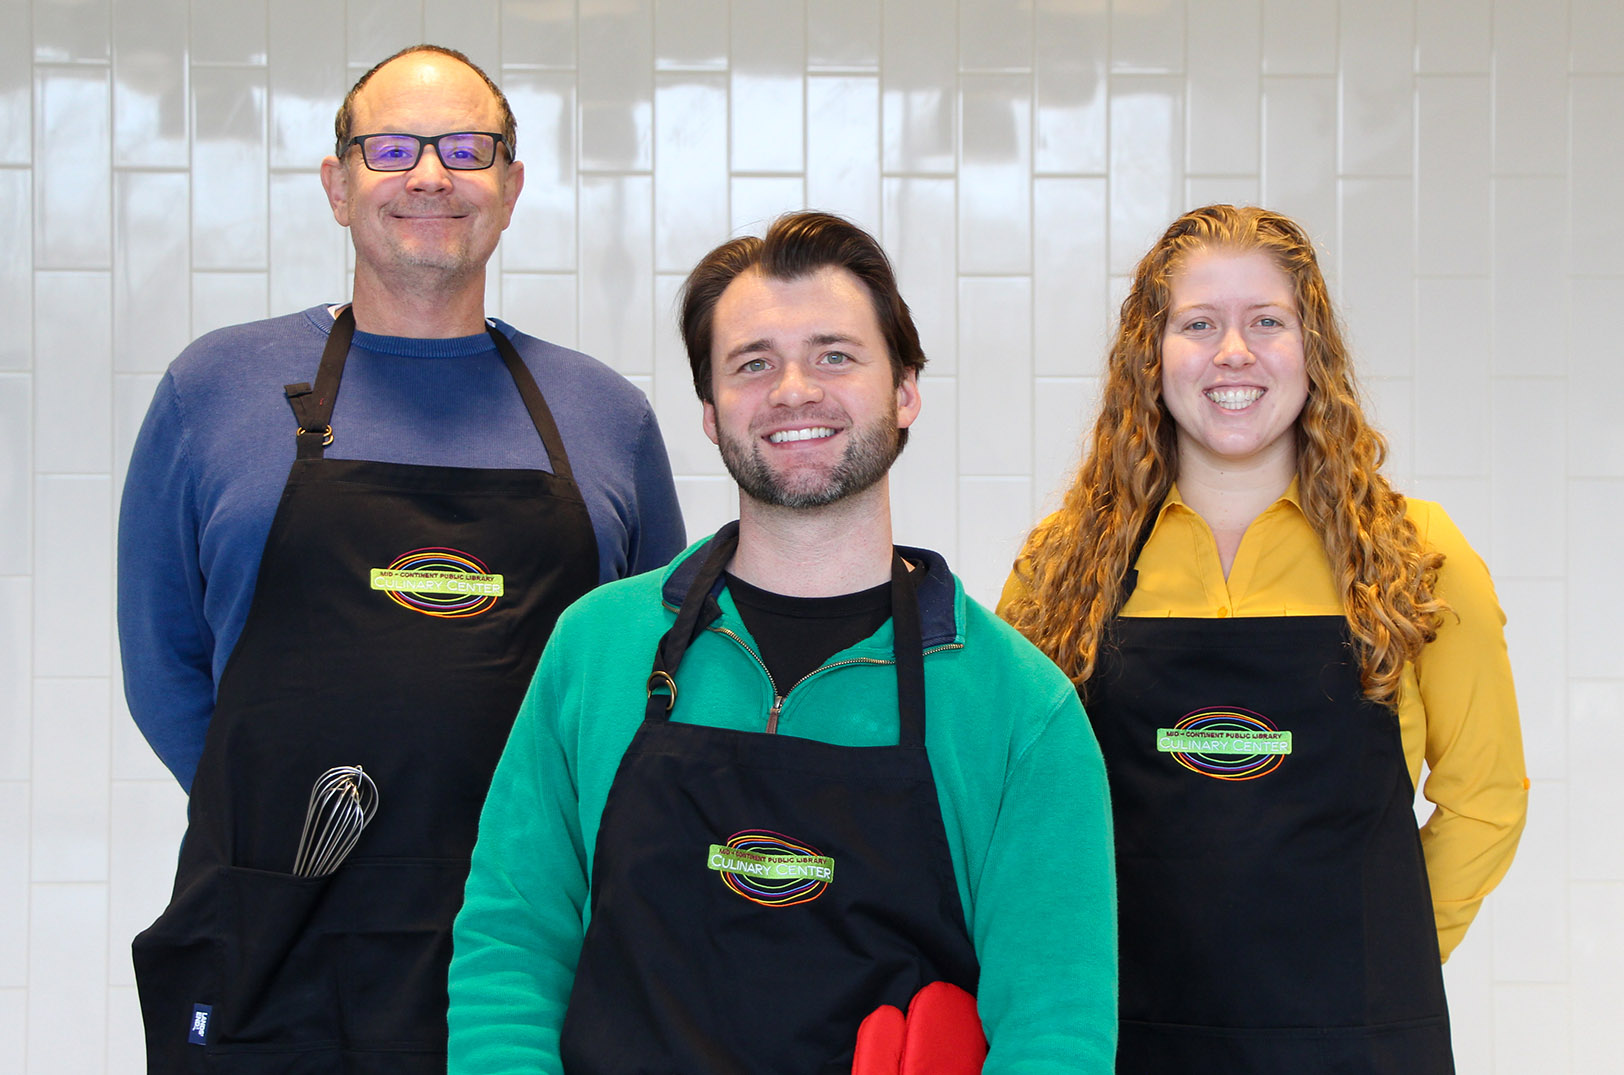 Culinary Center Team from left Charles Tibbs, Xander Winkel, Taylor Smith